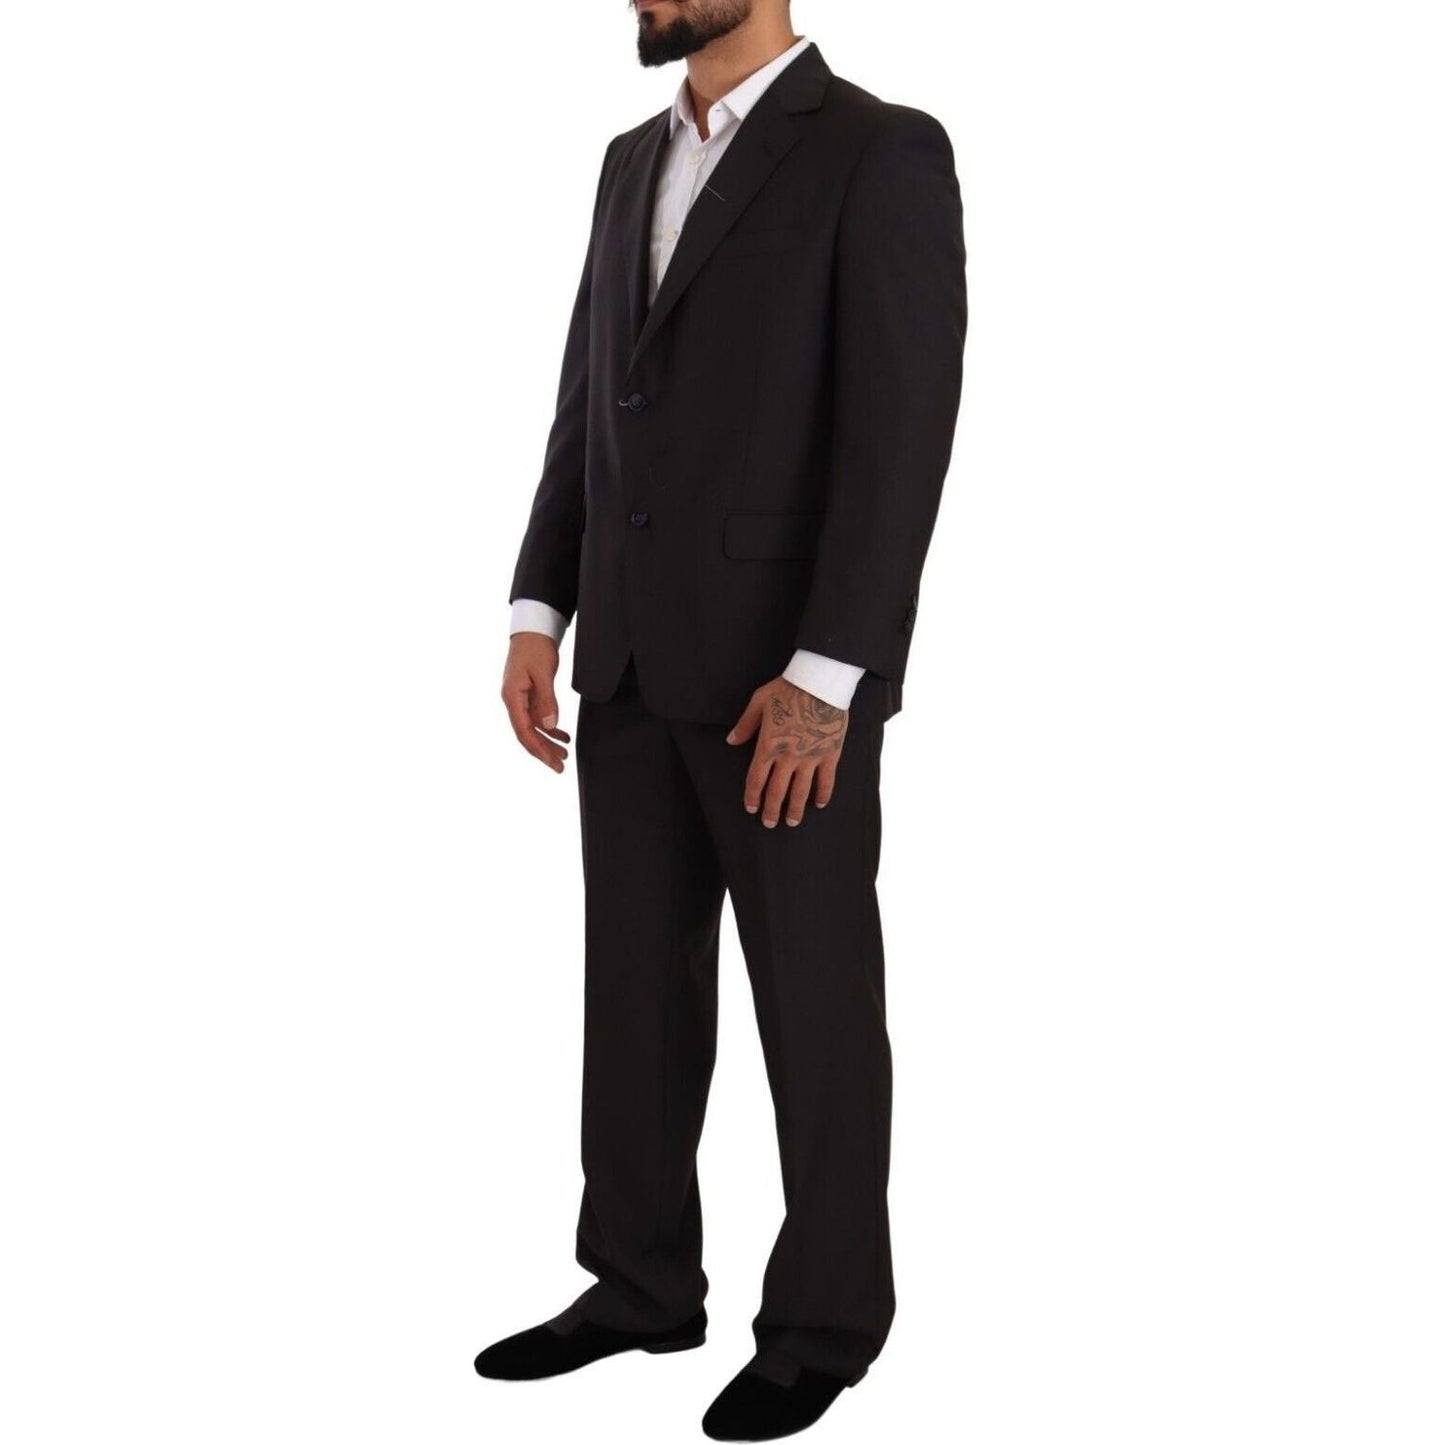 Domenico Tagliente Sleek Grey 2-Piece Mens Suit with Notch Lapels gray-polyester-single-breasted-formal-suit-1 s-l1600-16-4-39de5120-10e.jpg